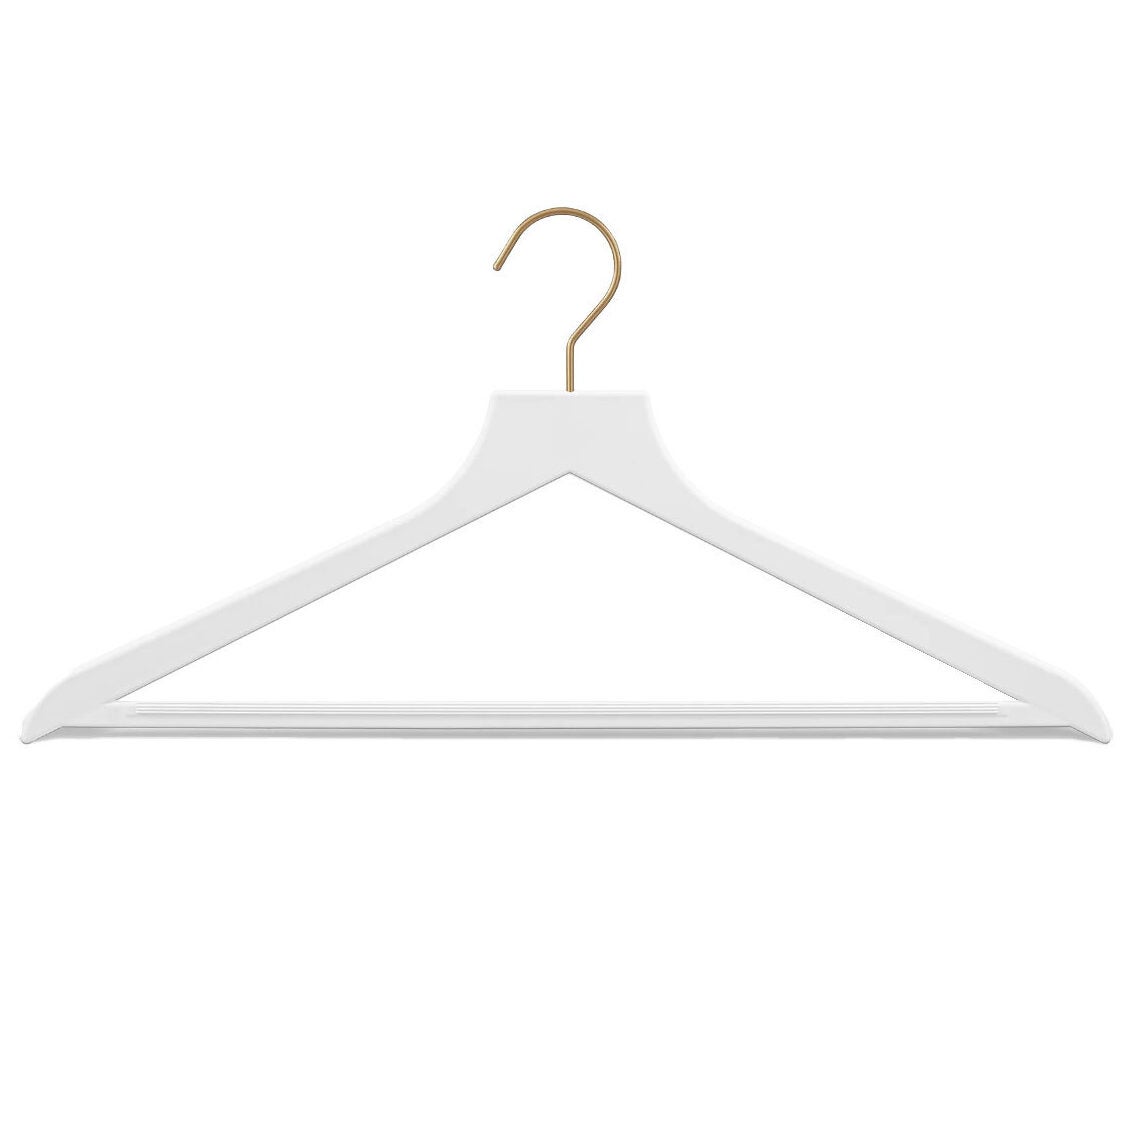 Everyday hangers in matte white/brass